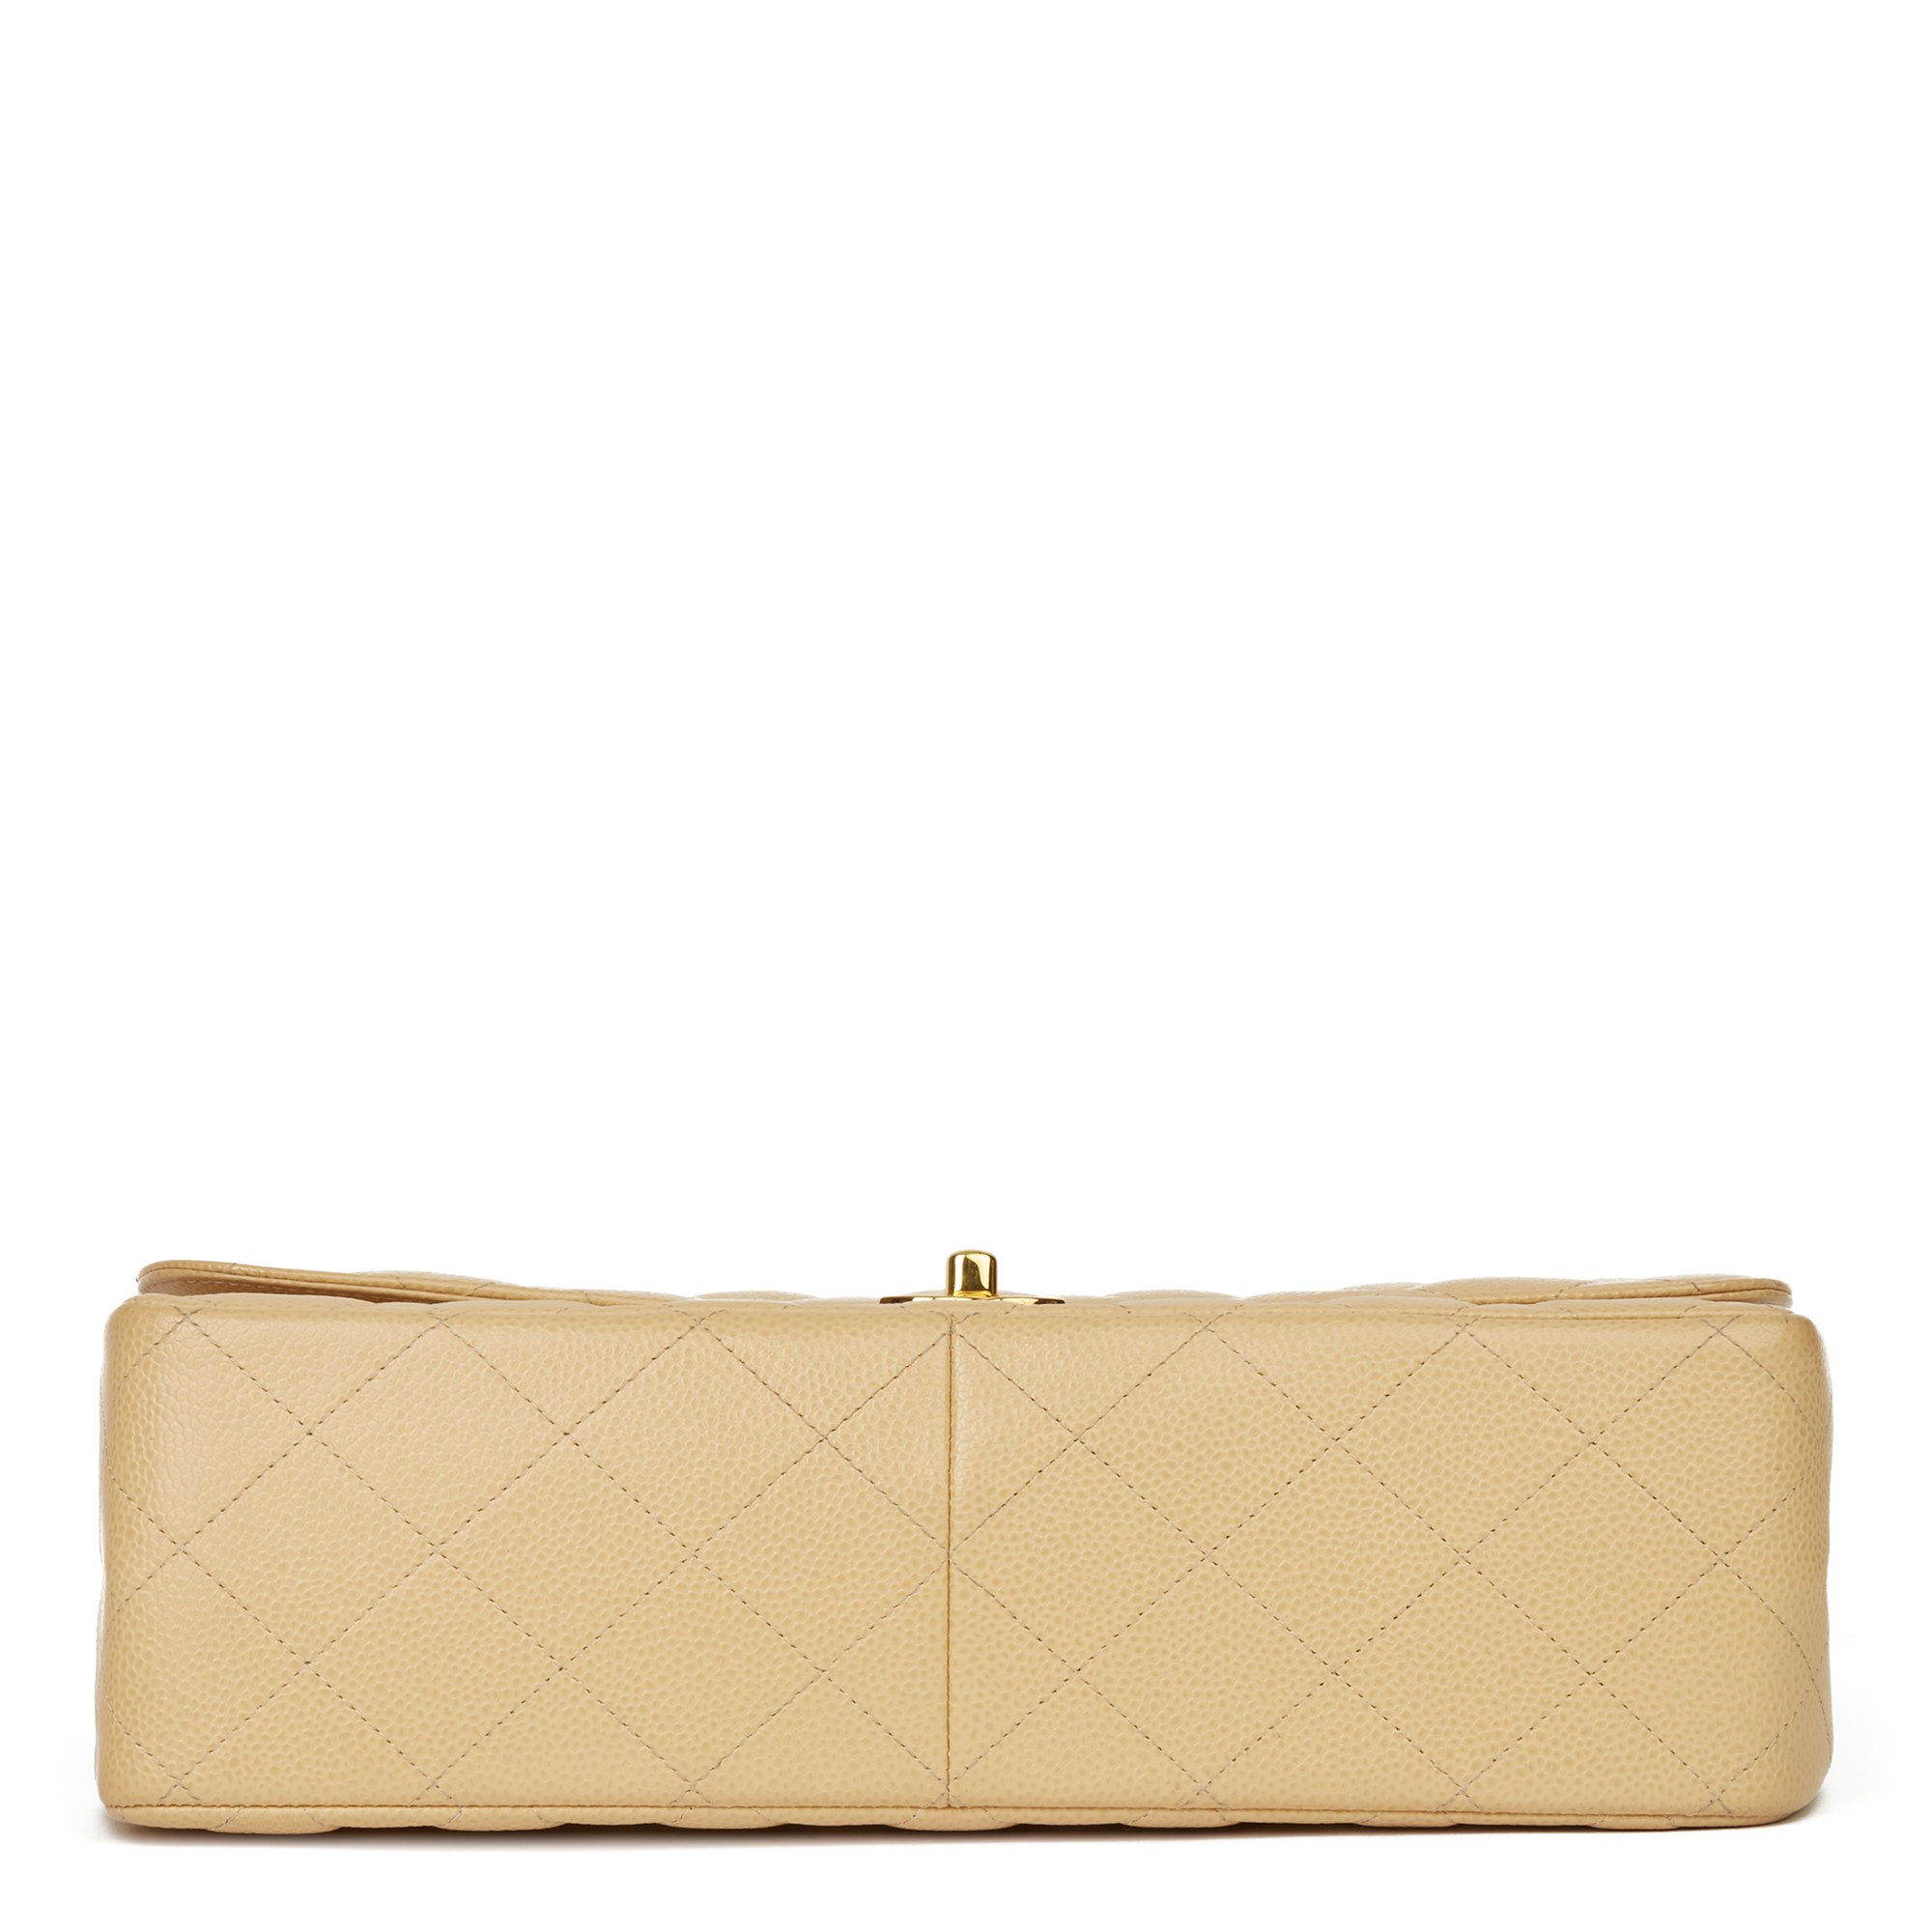 Chanel Jumbo Classic Double Flap Bag 2018 HB2982 | Second Hand Handbags